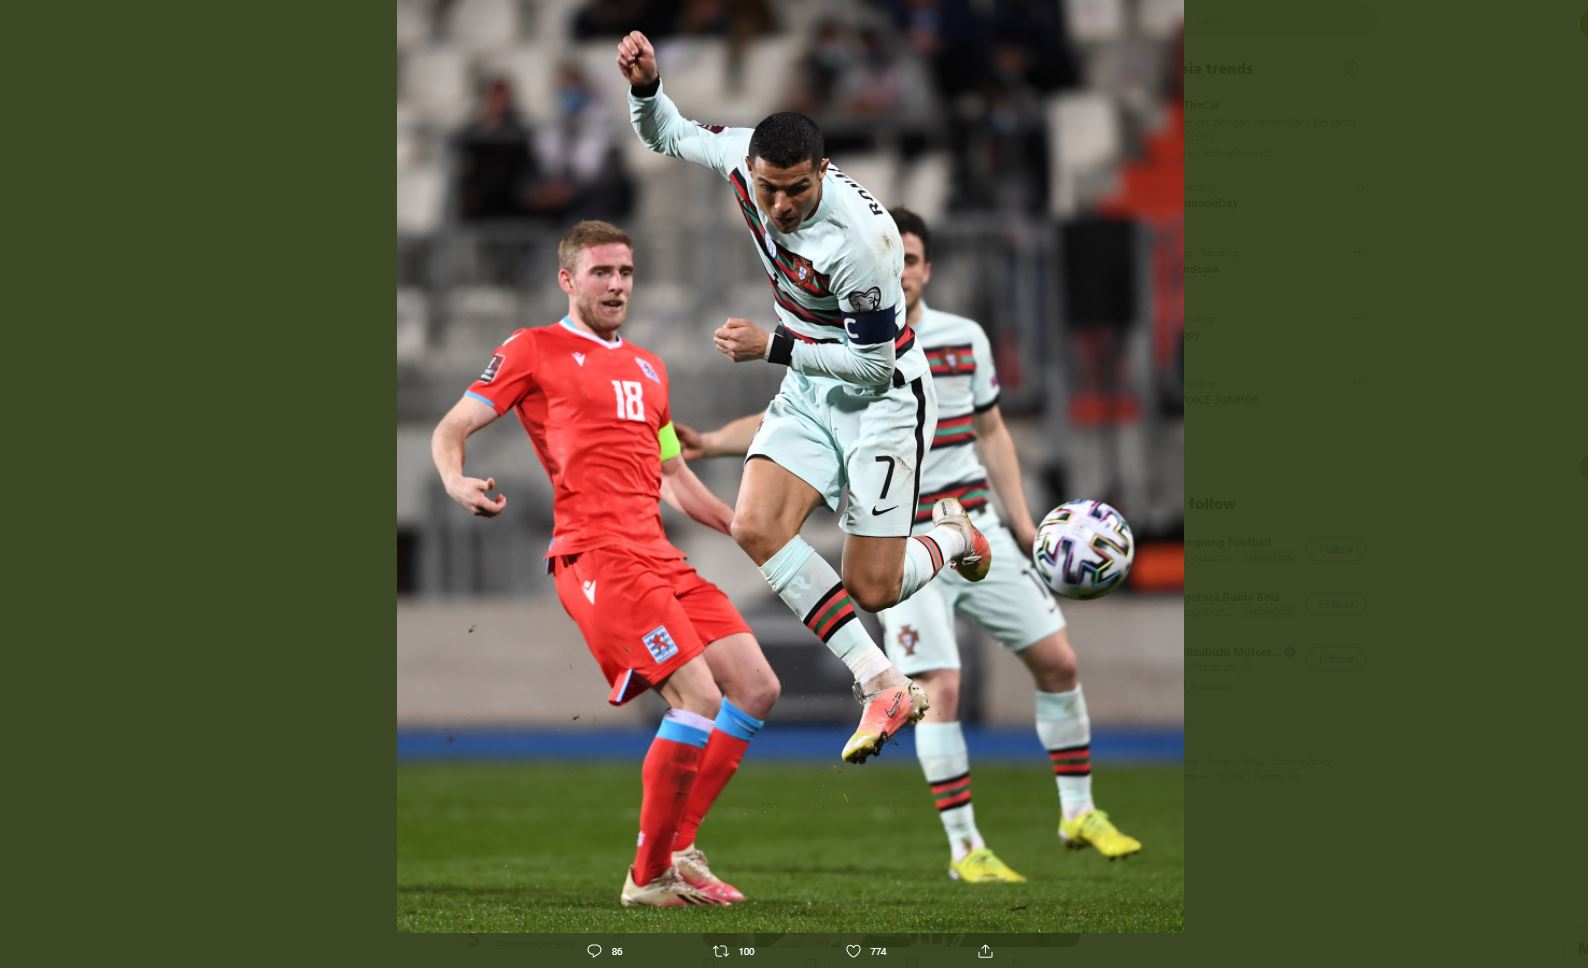 Hasil Luksemburg vs Portugal: Gol Cristiano Ronaldo Warnai Kemenangan Seleccao